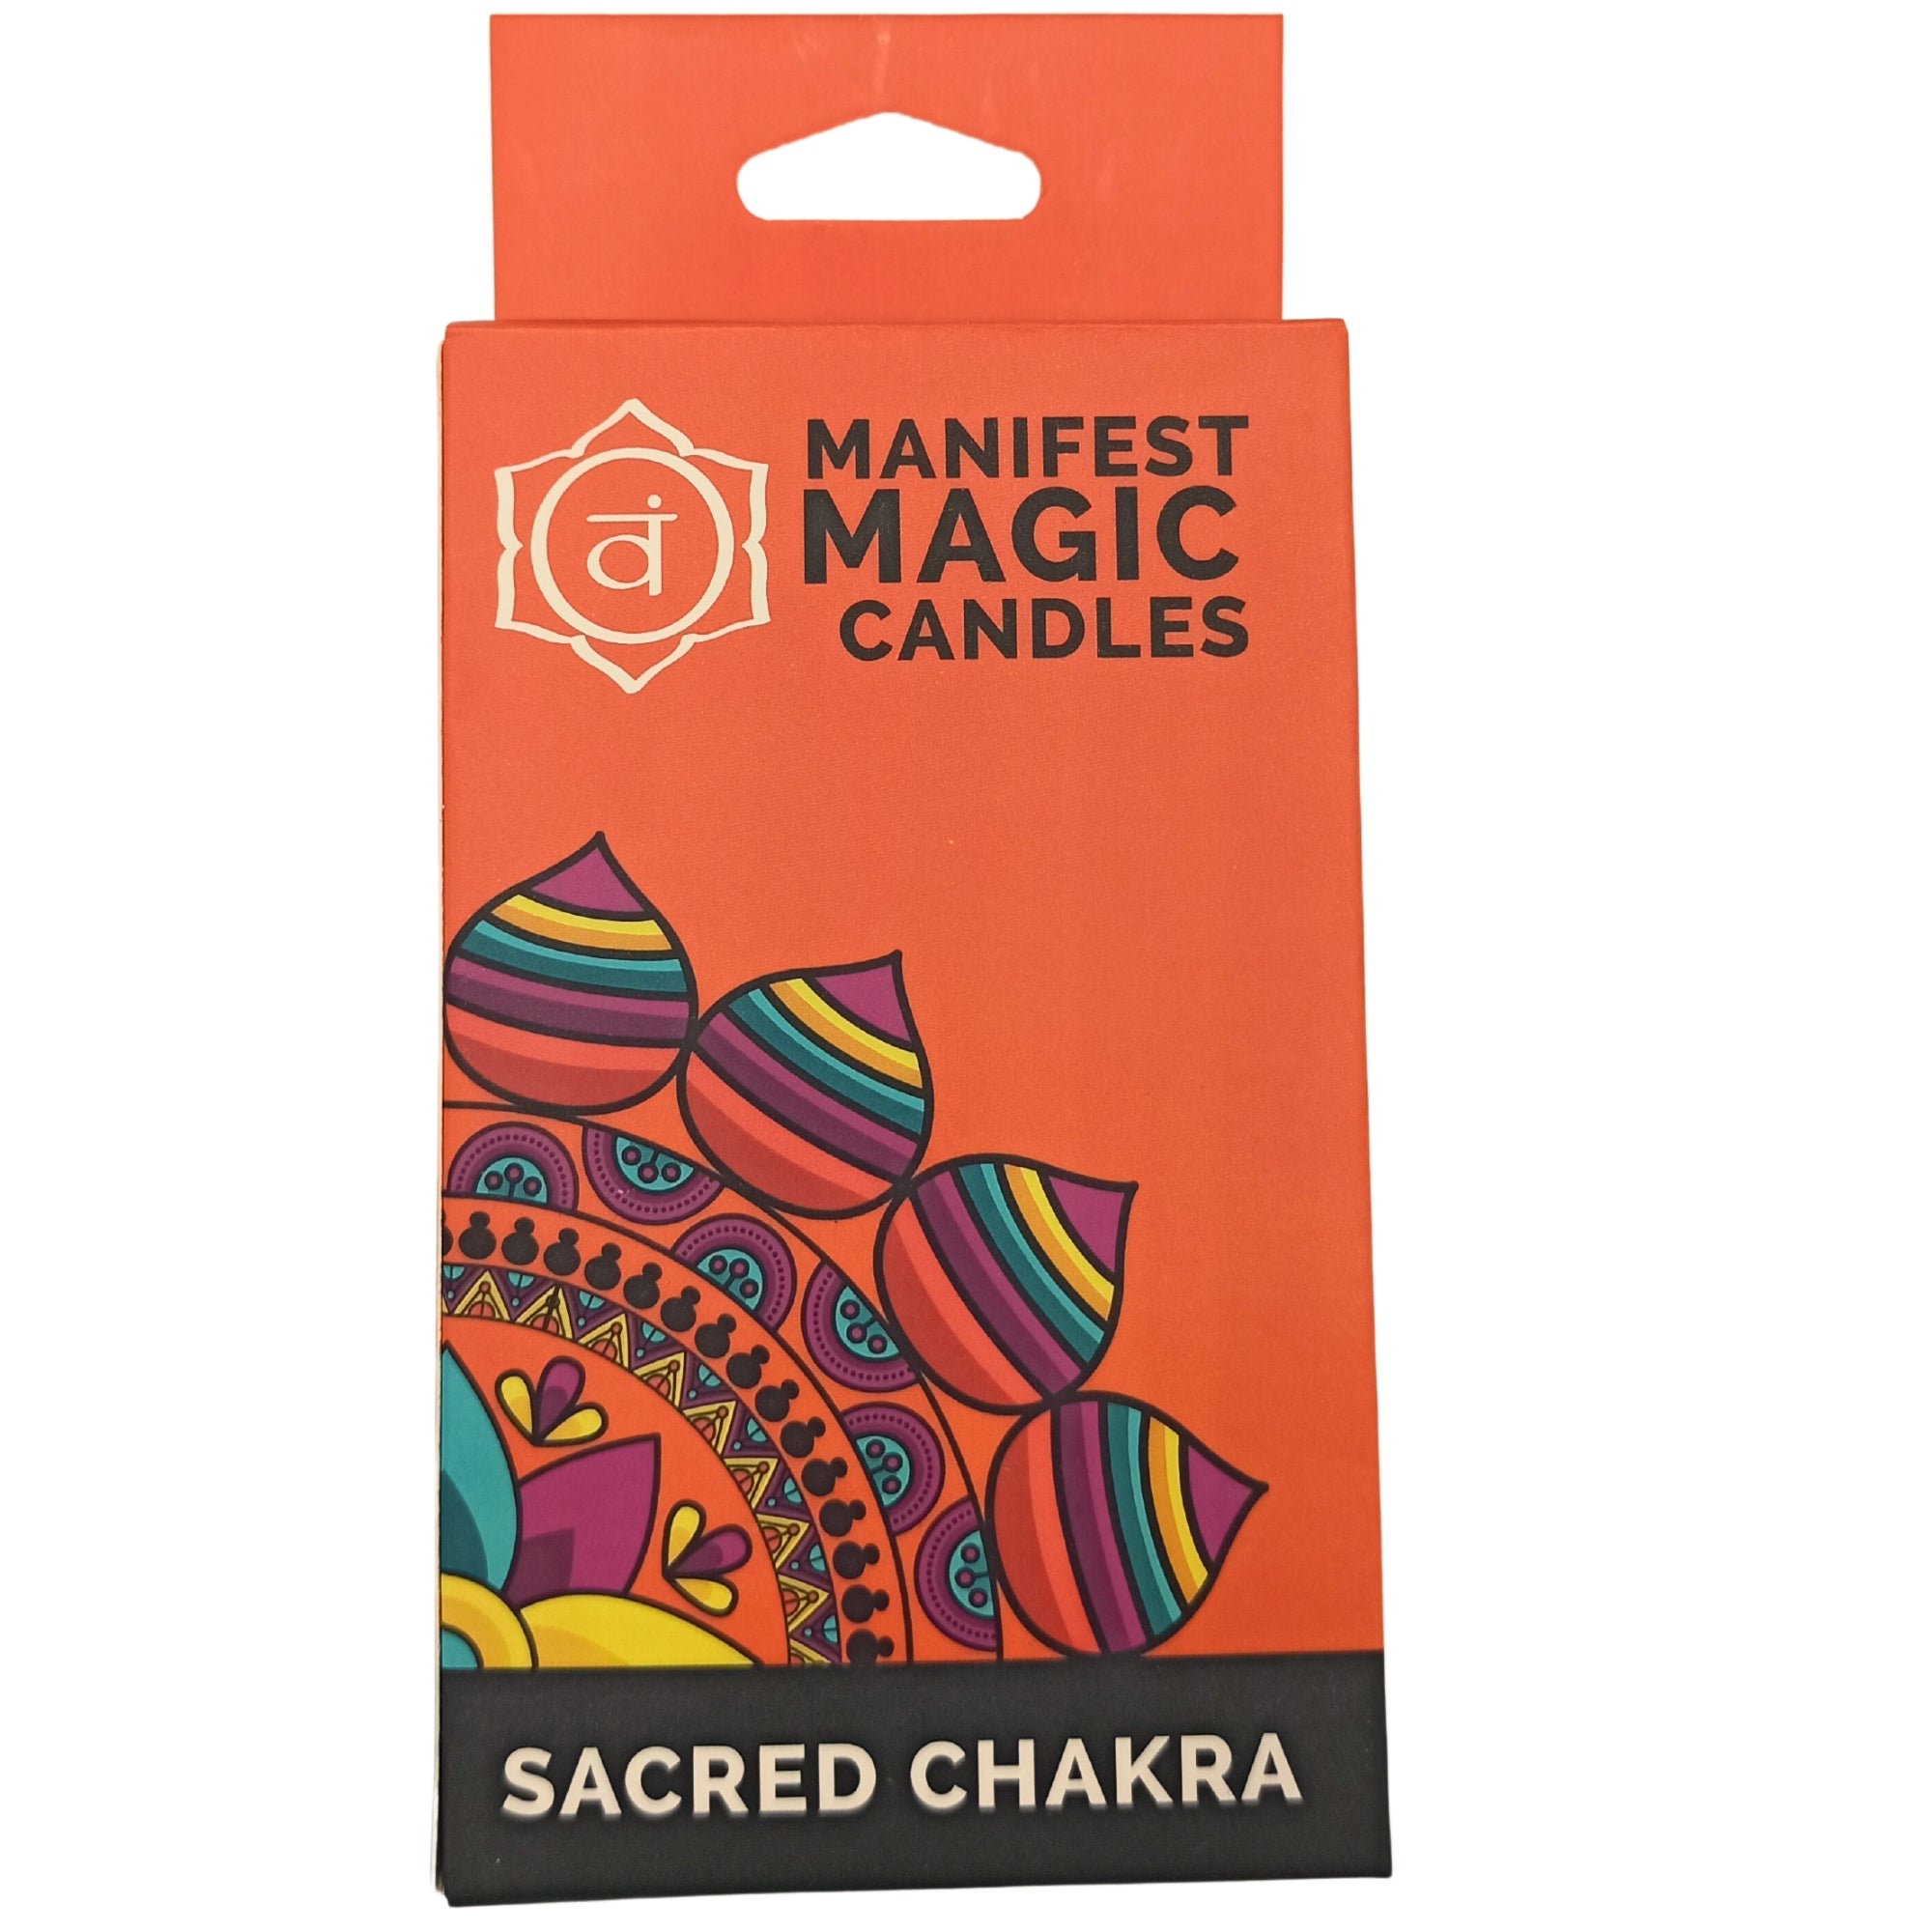 View Manifest Magic Candles pack of 12 Orange Sacred Chakra information